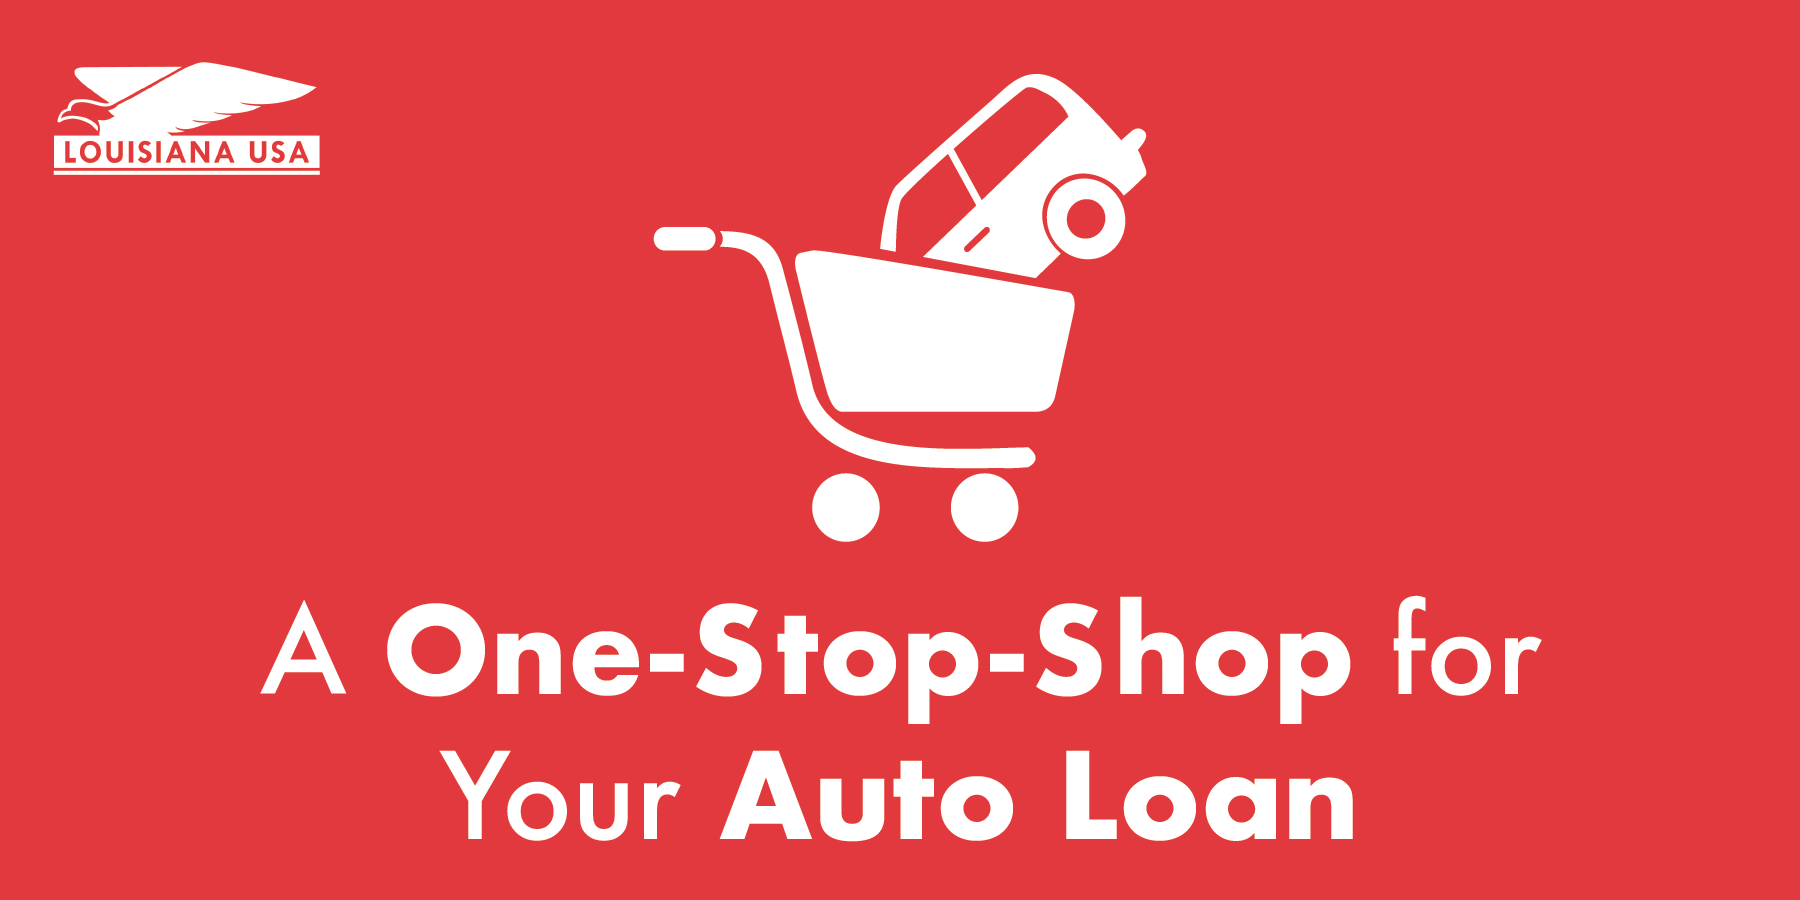 Auto Loan, One-stop-shop